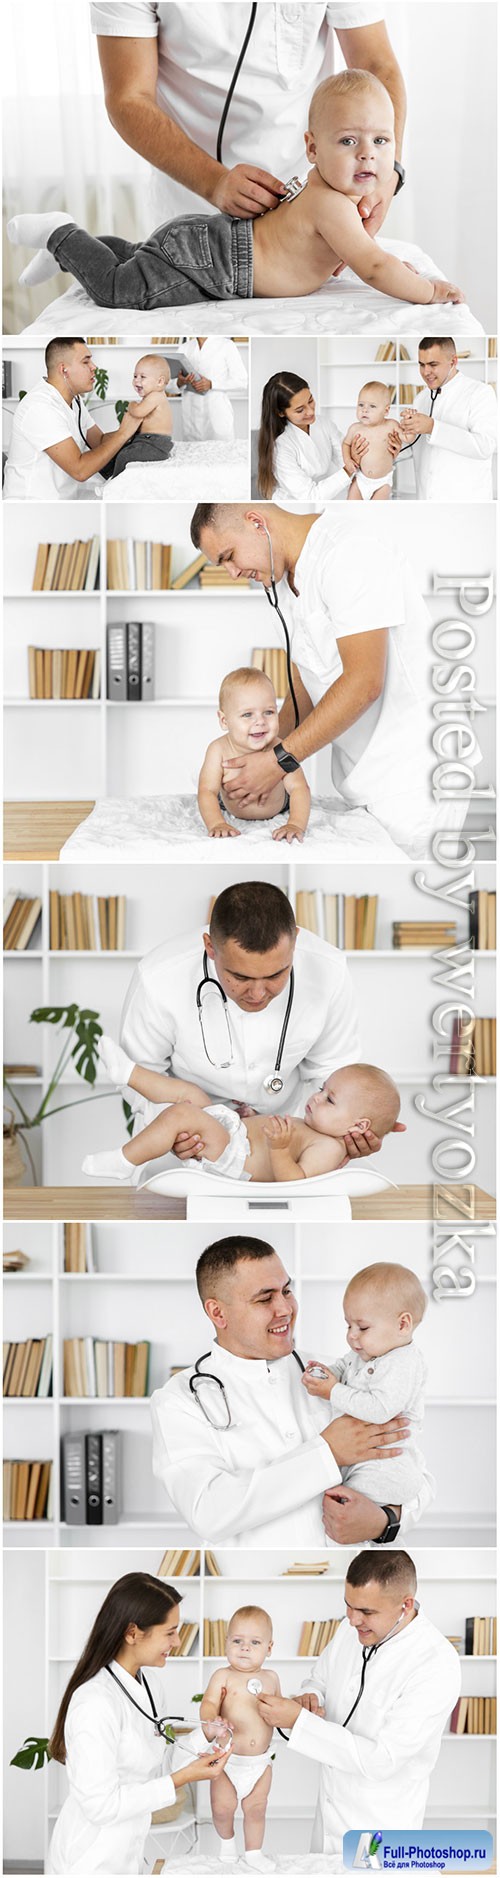 Doctor hands listening little baby stock photo